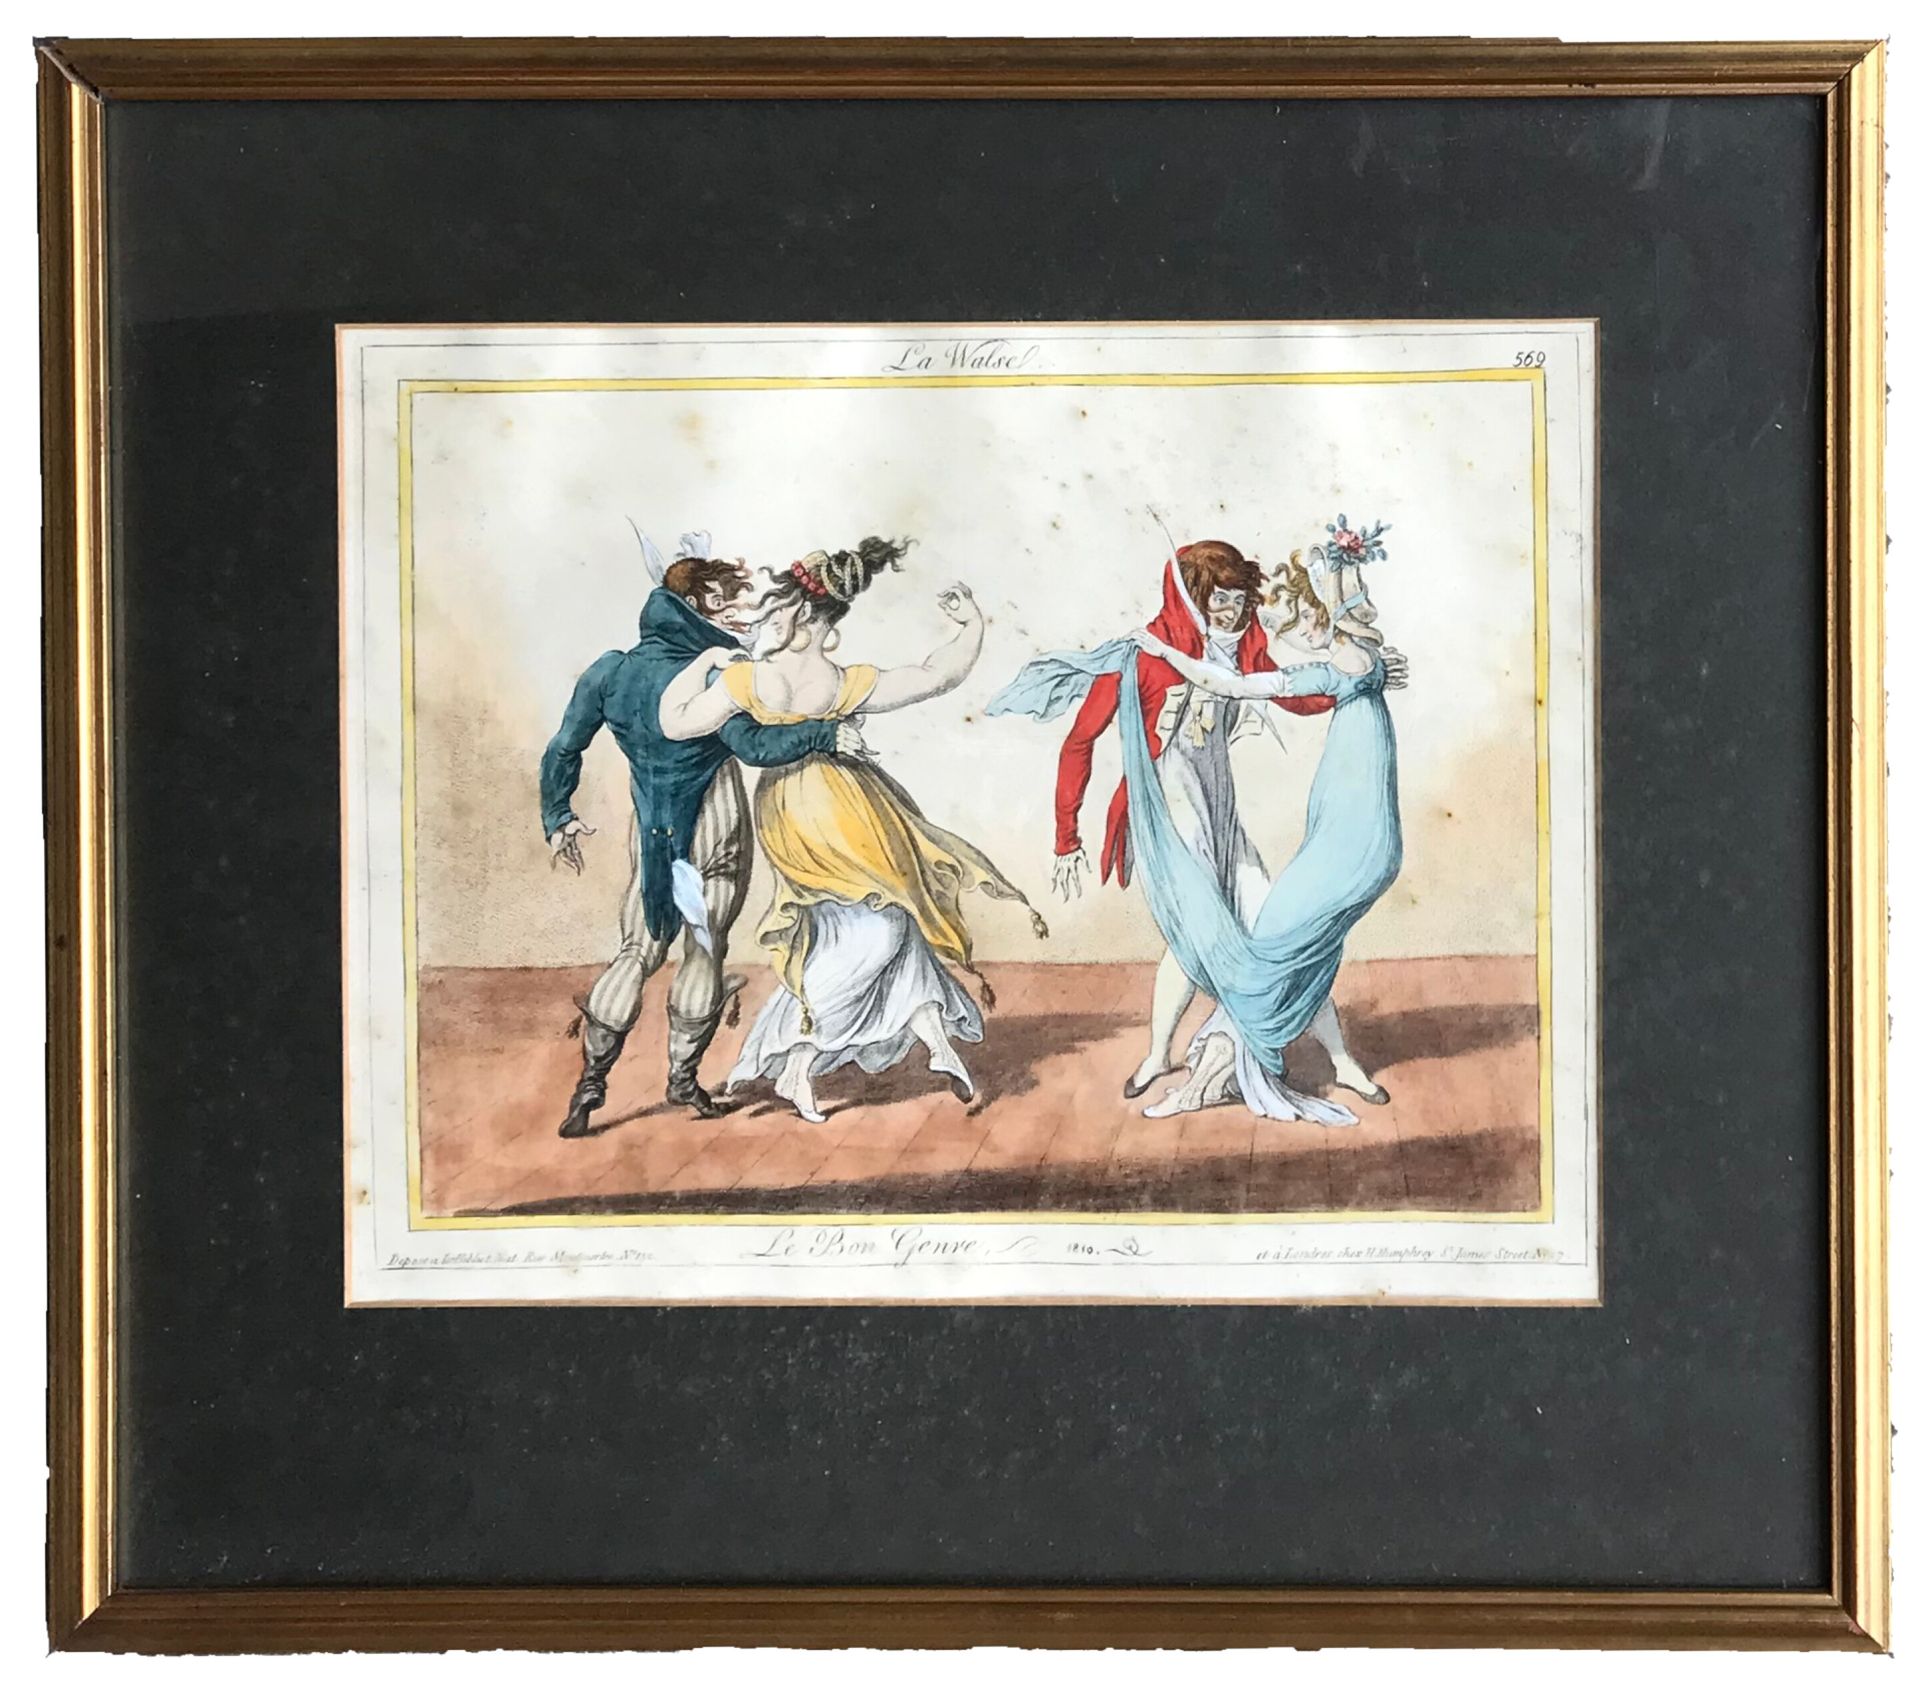 Null After Pierre de la MESANGERE (1761-1831)

The Walse from the series "le bon&hellip;